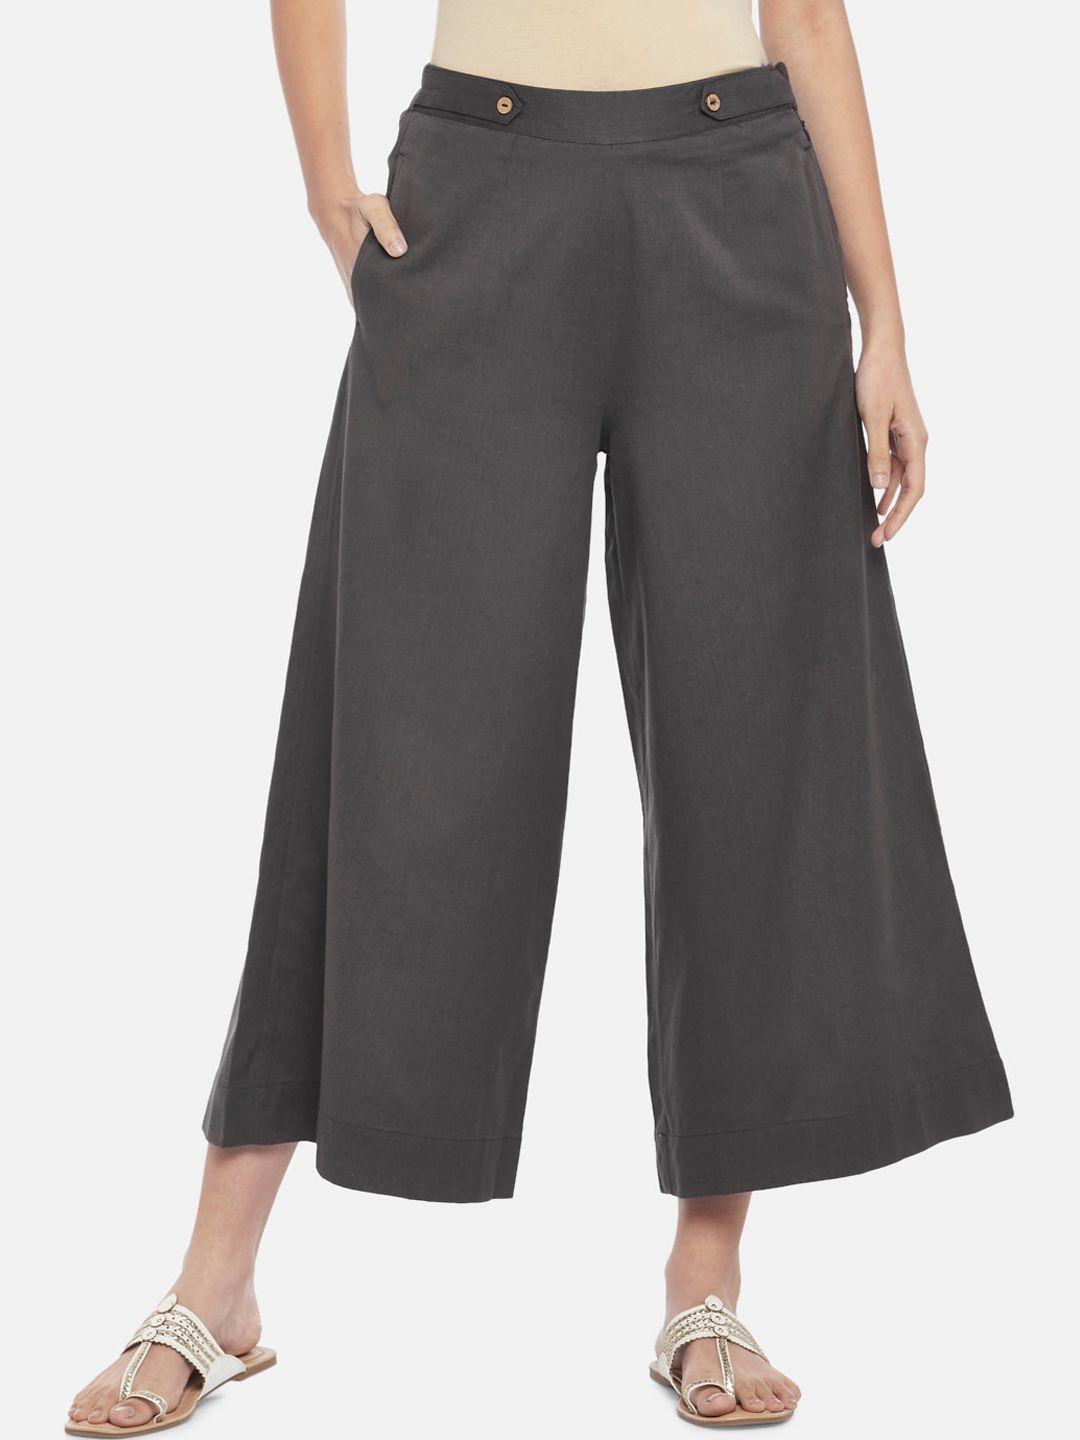 akkriti by pantaloons women grey culottes trousers